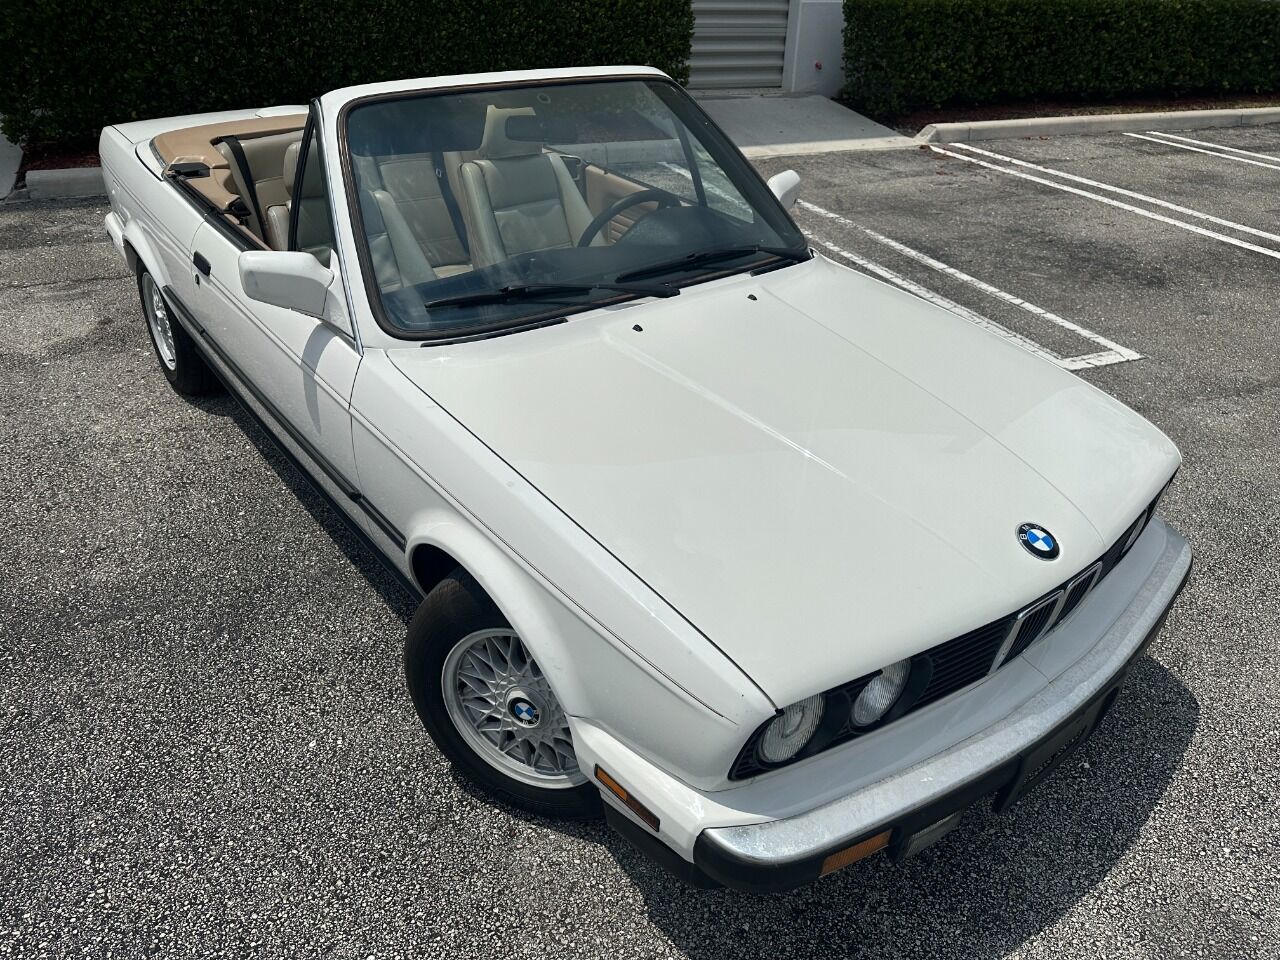 1989 BMW 3 Series Convertible - $13,900